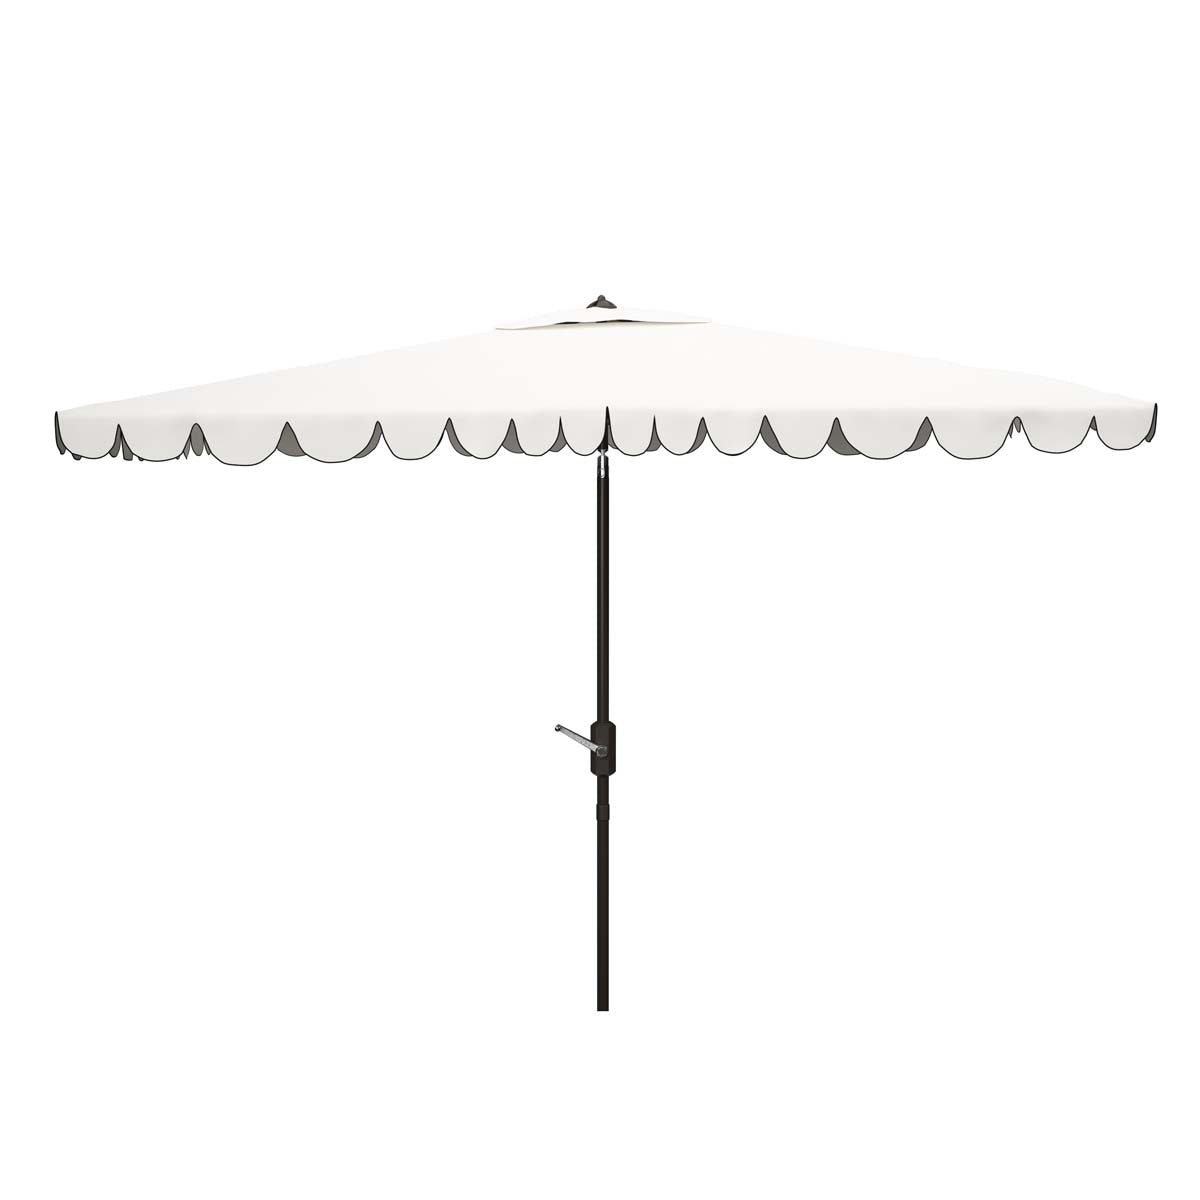 Safavieh Venice 6.5 X 10 Ft Rect Crank Umbrella , PAT8310